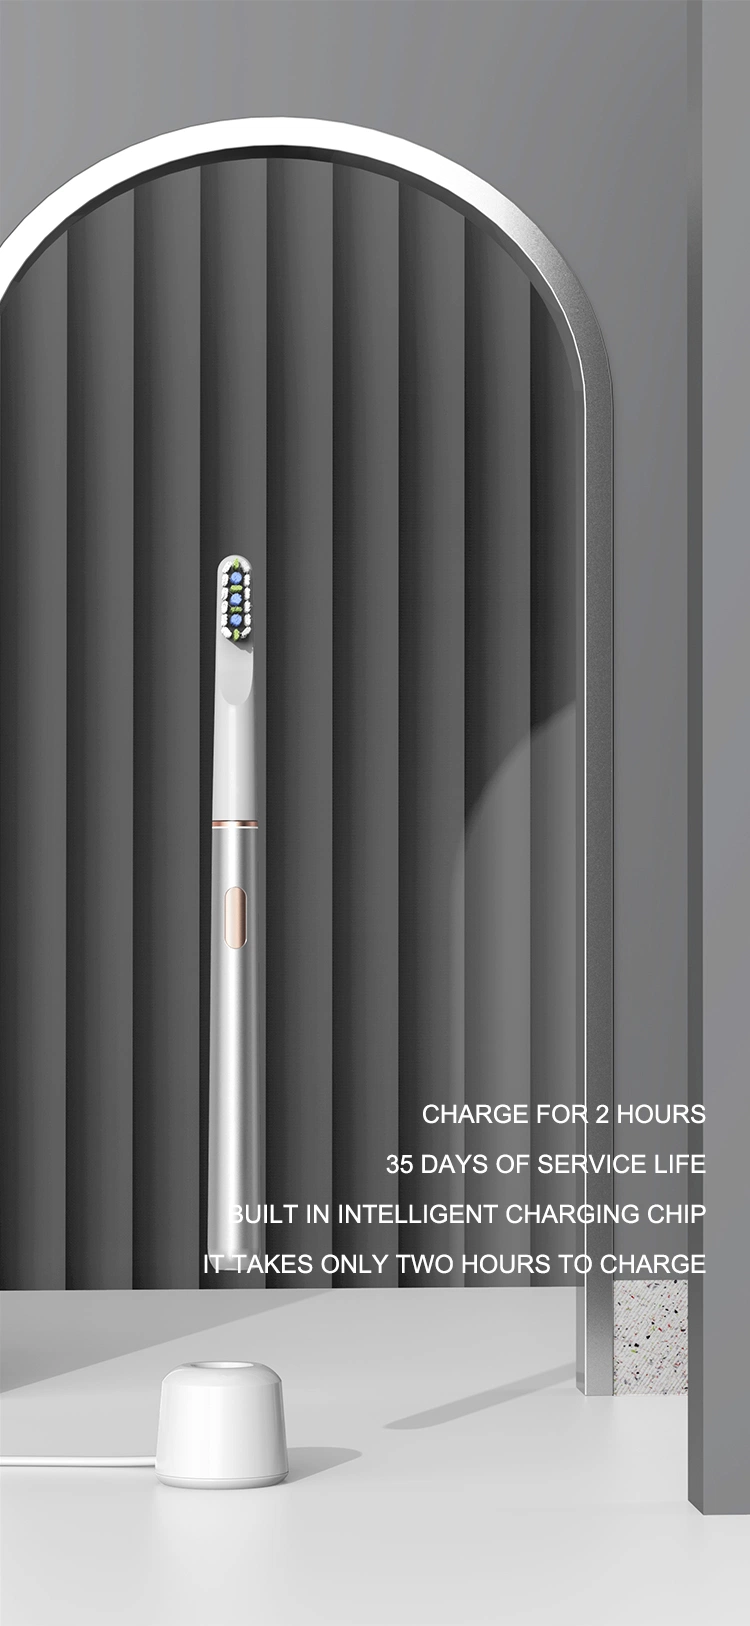 New Design USB Charging Black Vibrating Electric Toothbrush